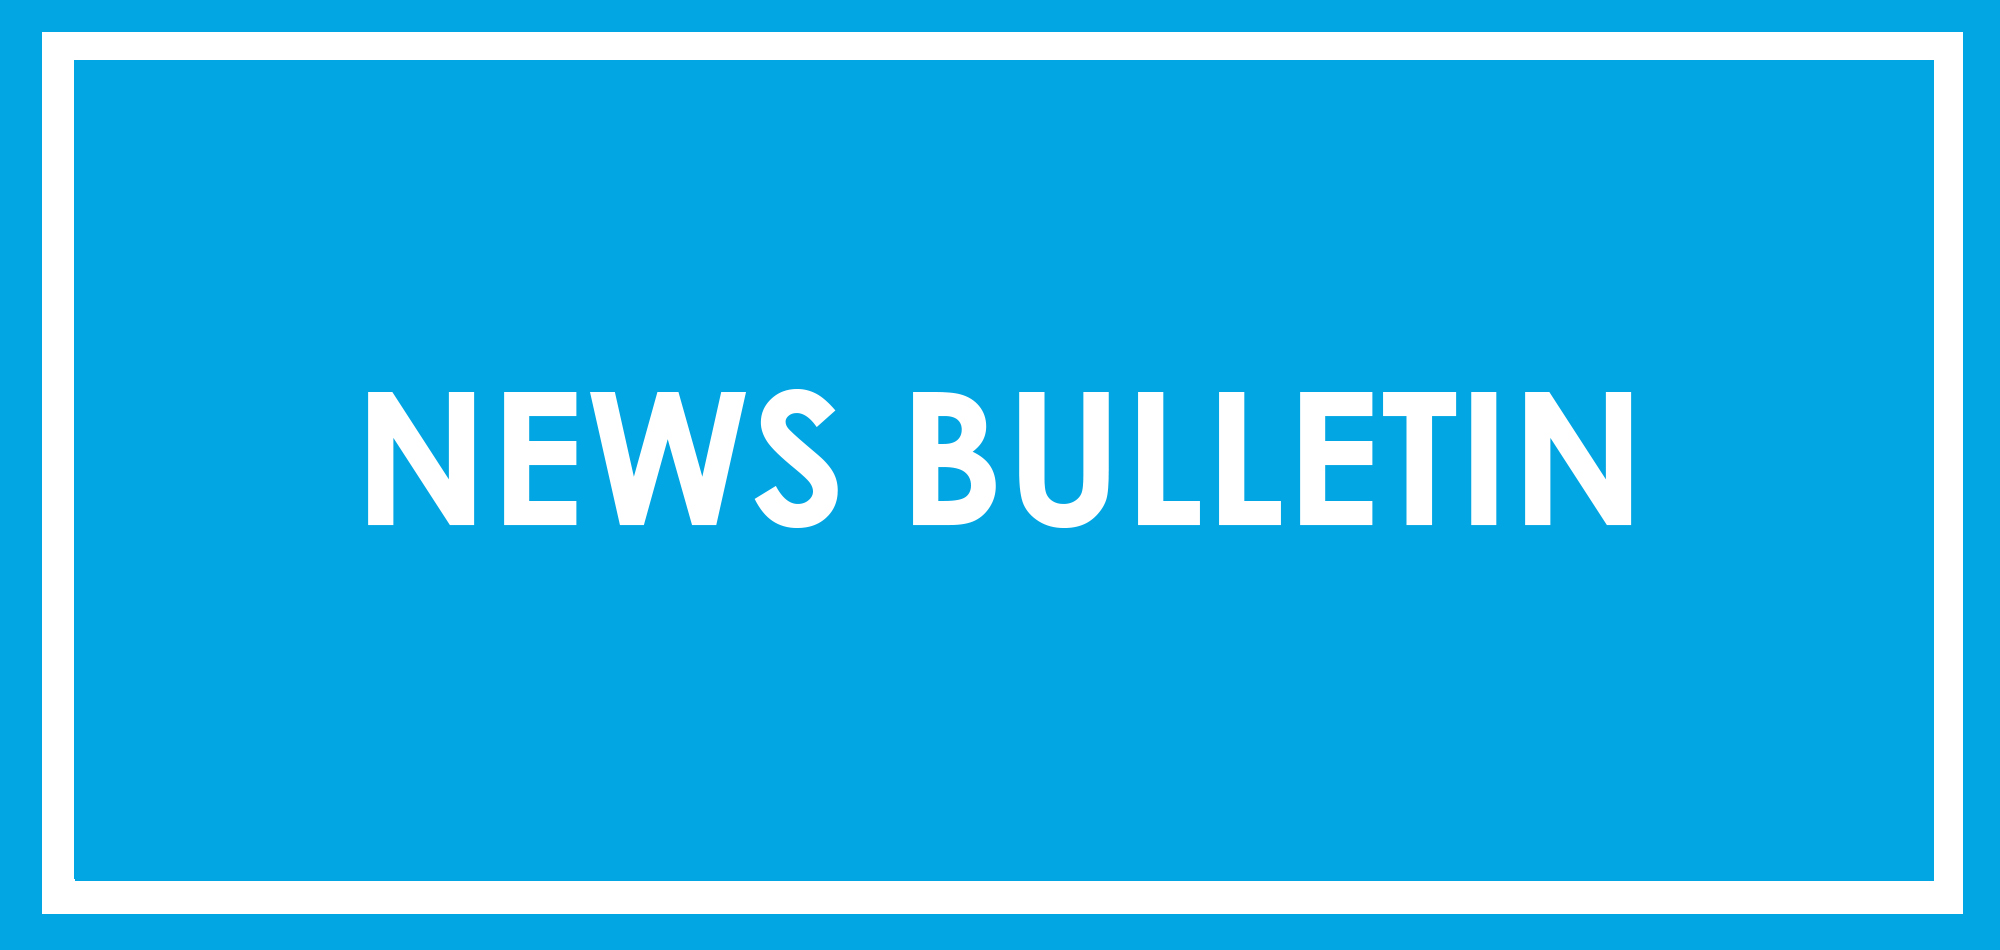 News Bulletin - 02.05.22